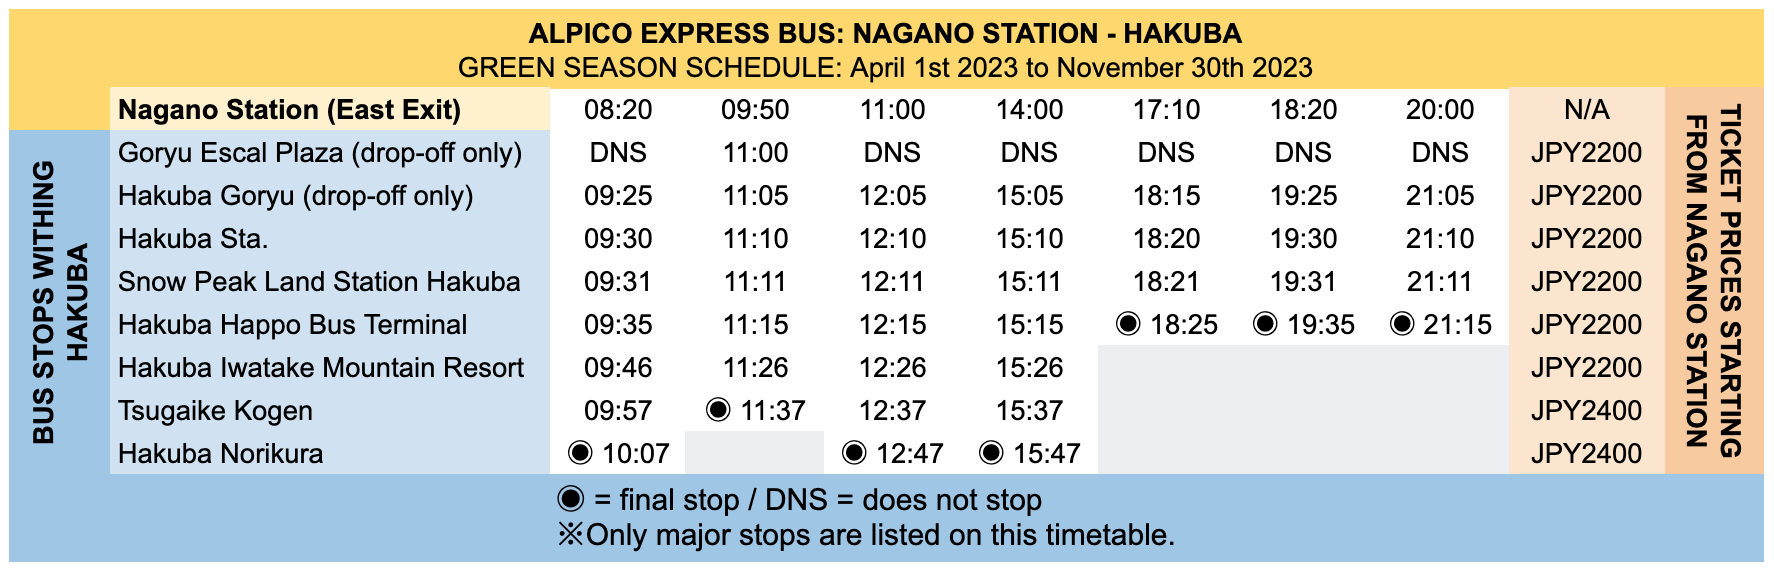 alpico-summer-express-bus-timetable-from-nagano-to-hakuba